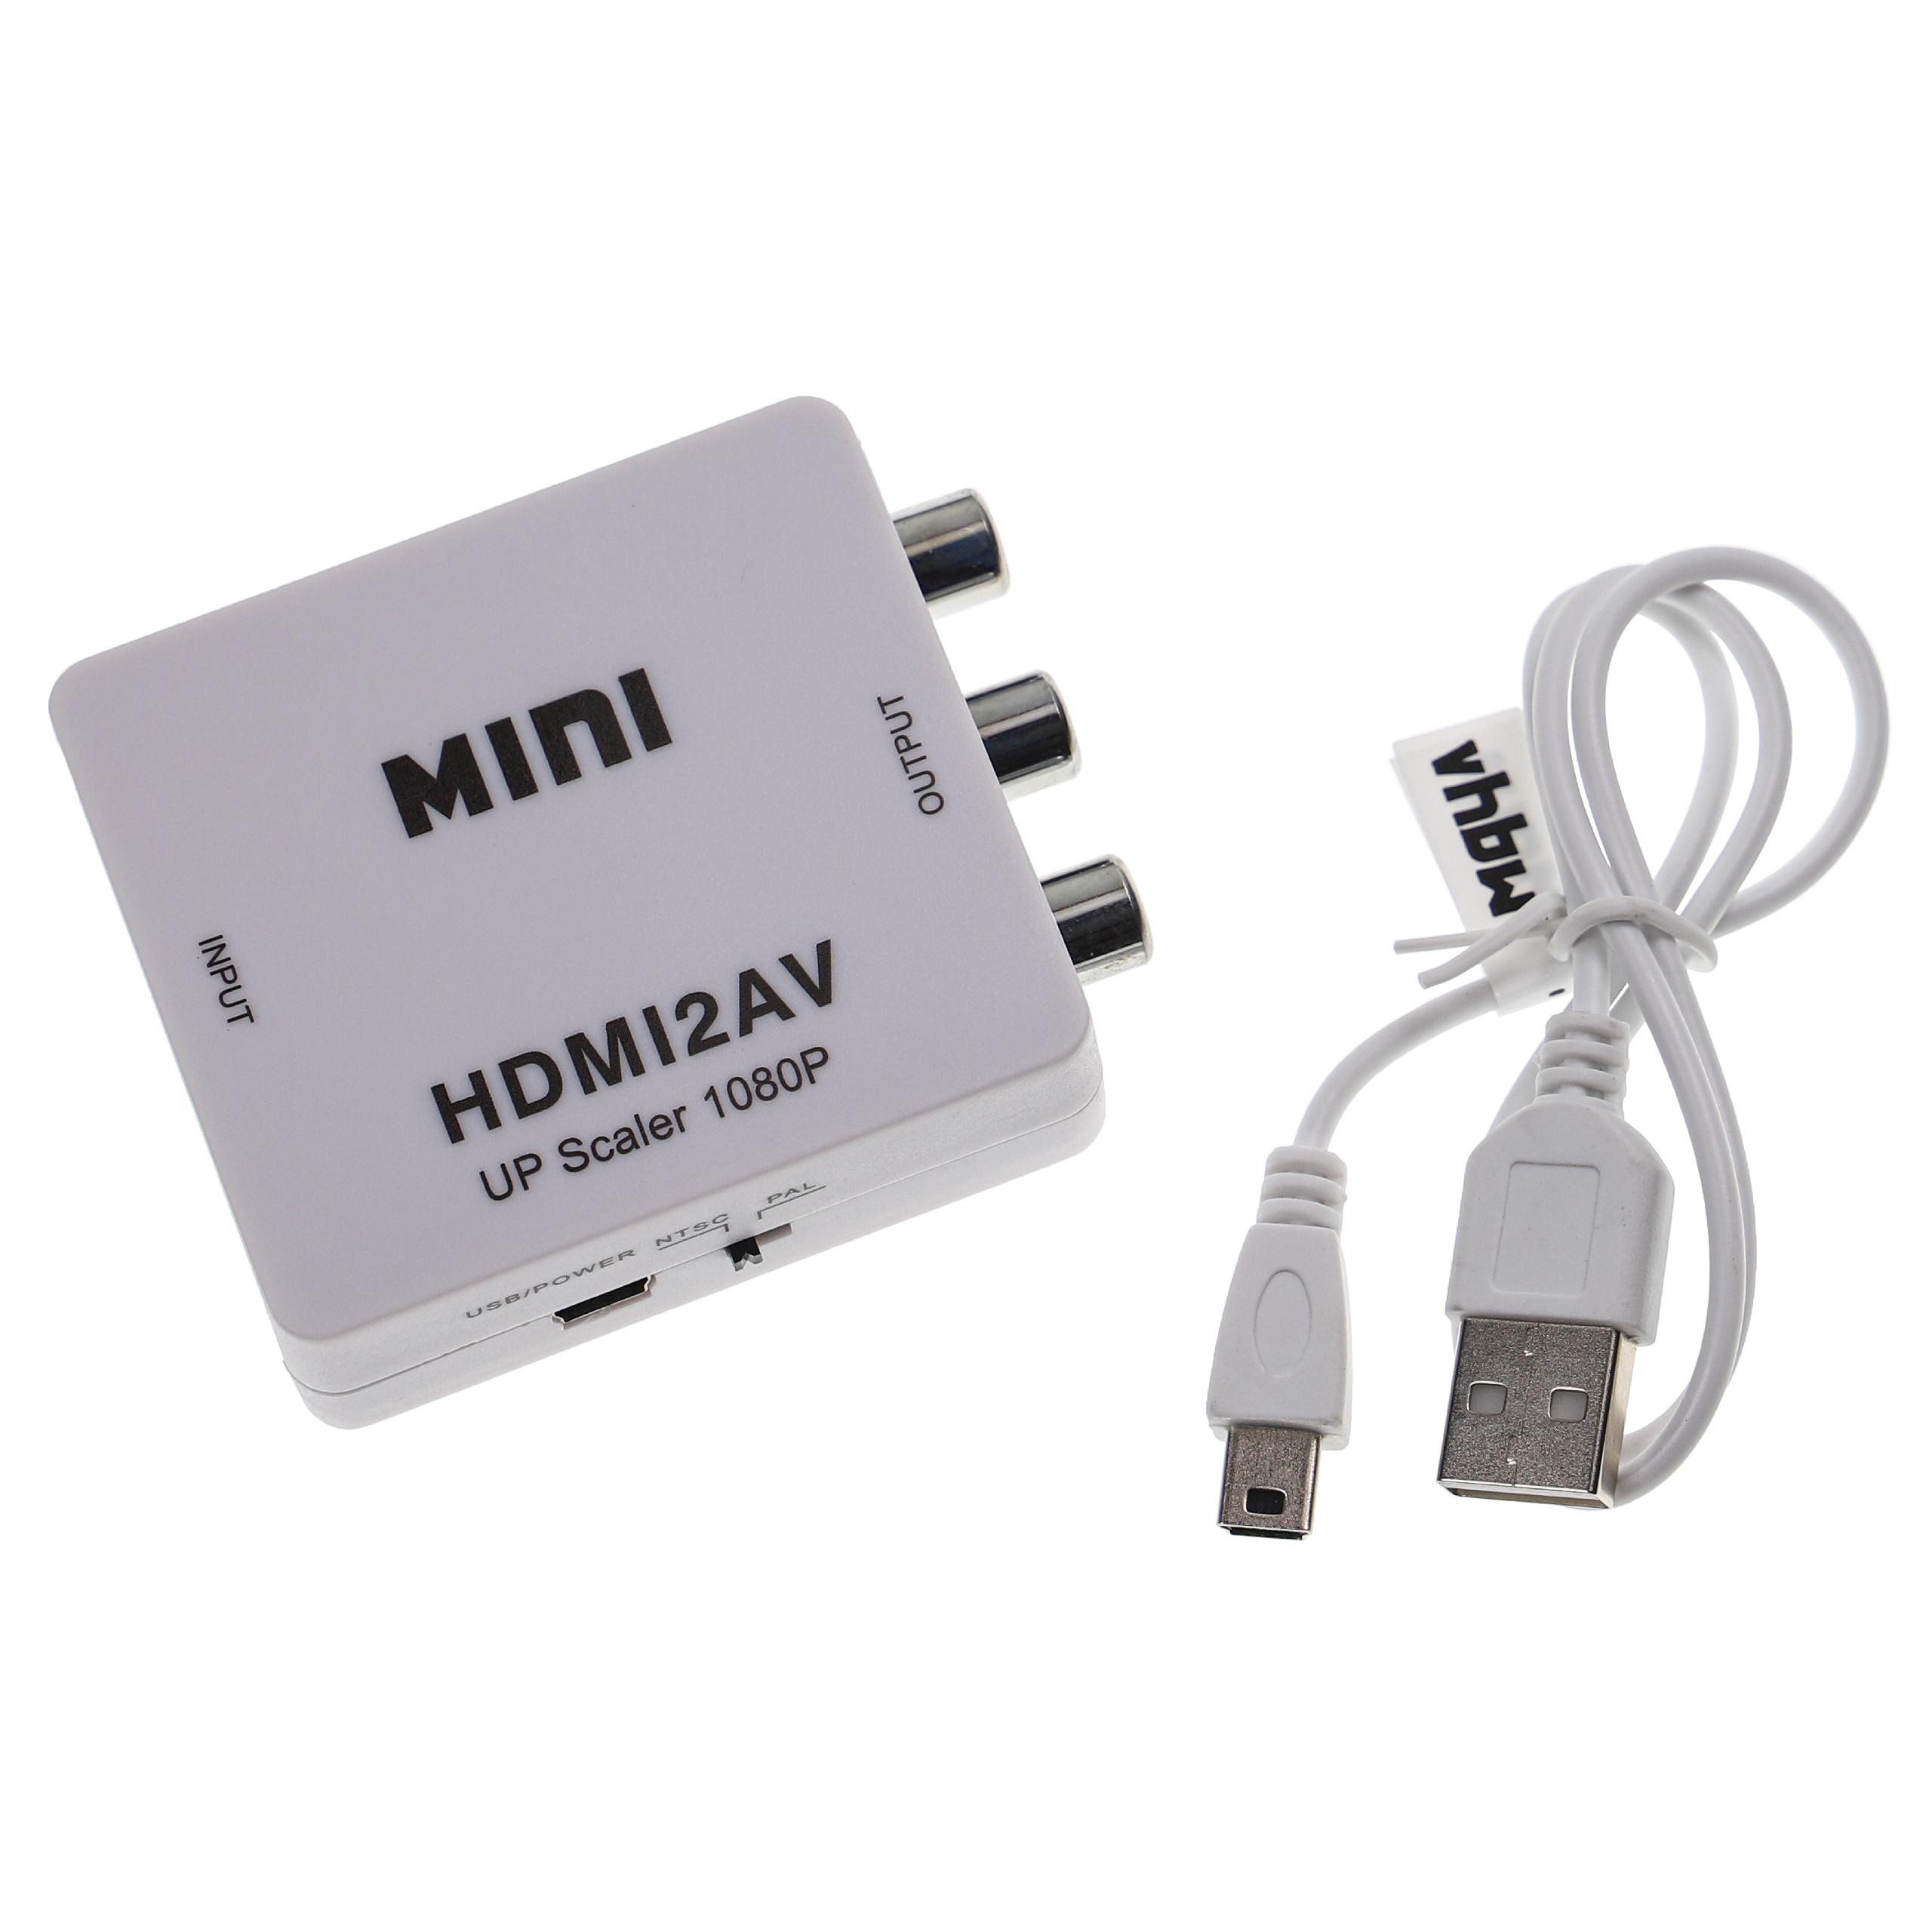 Acheter un adaptateur HDMI ?